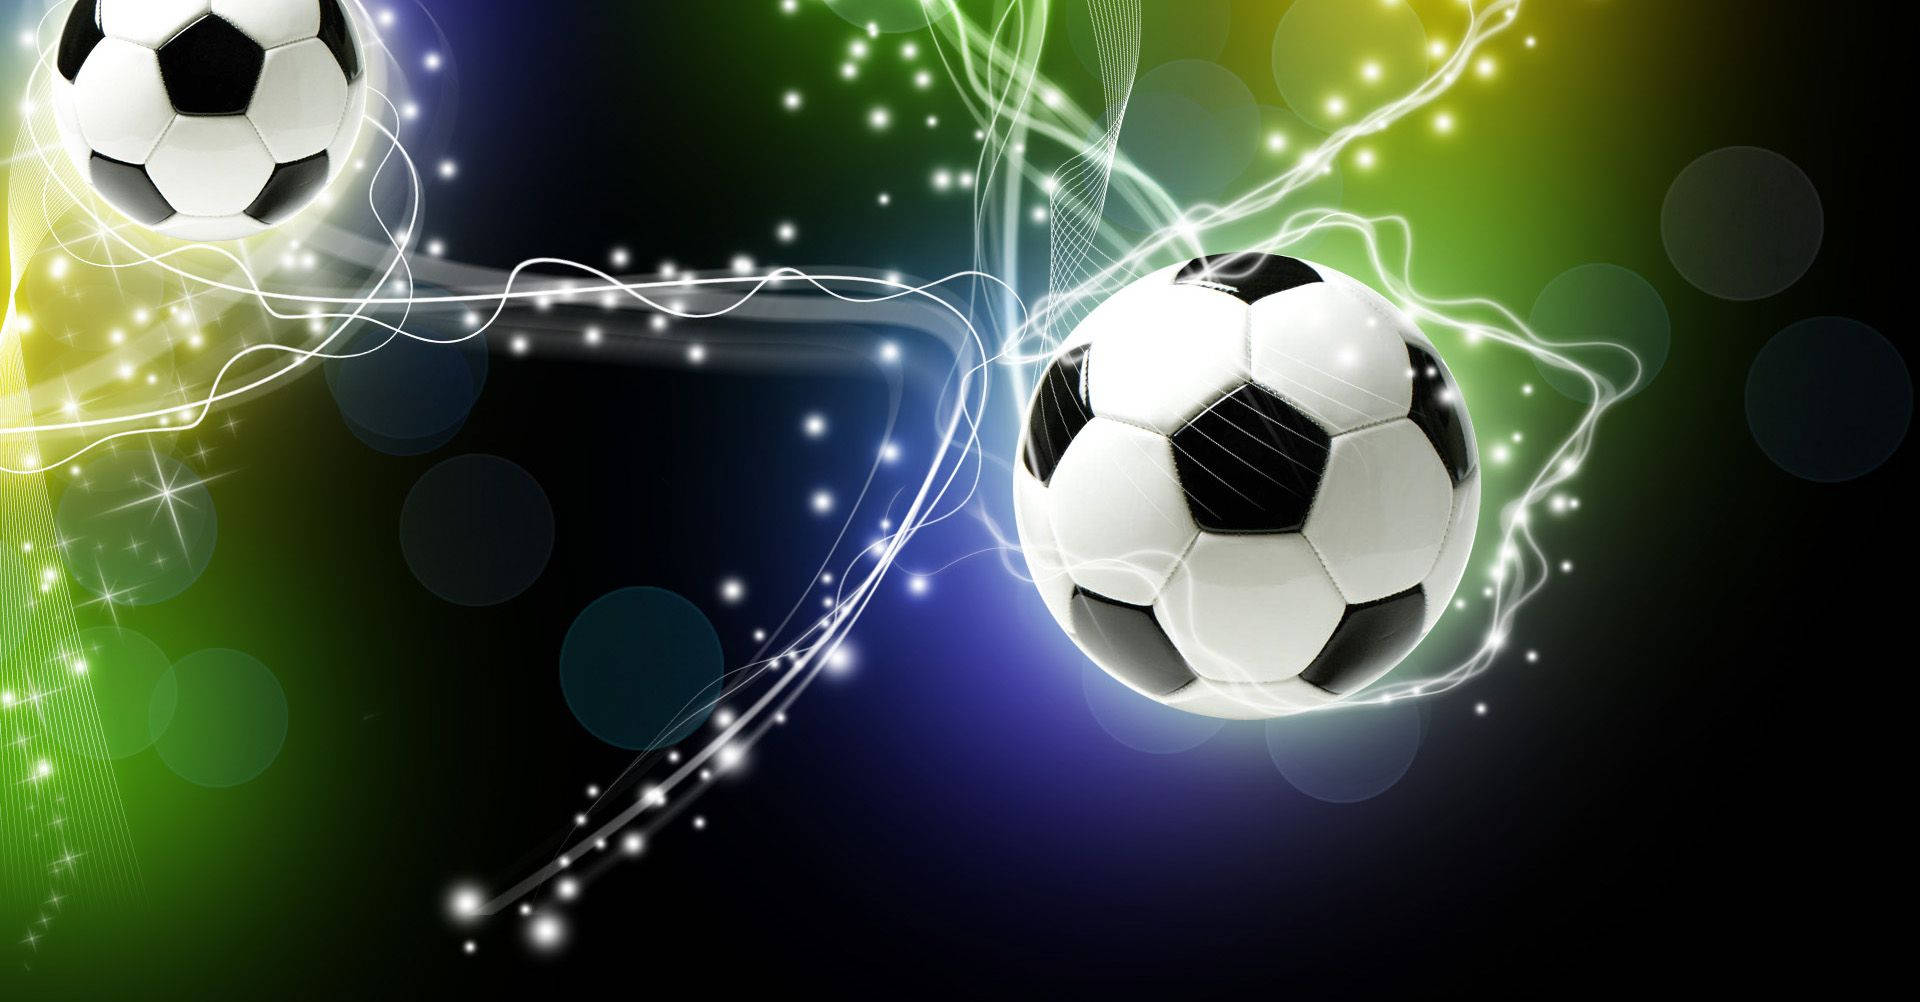 Cool Soccer Balls Fantasy Design